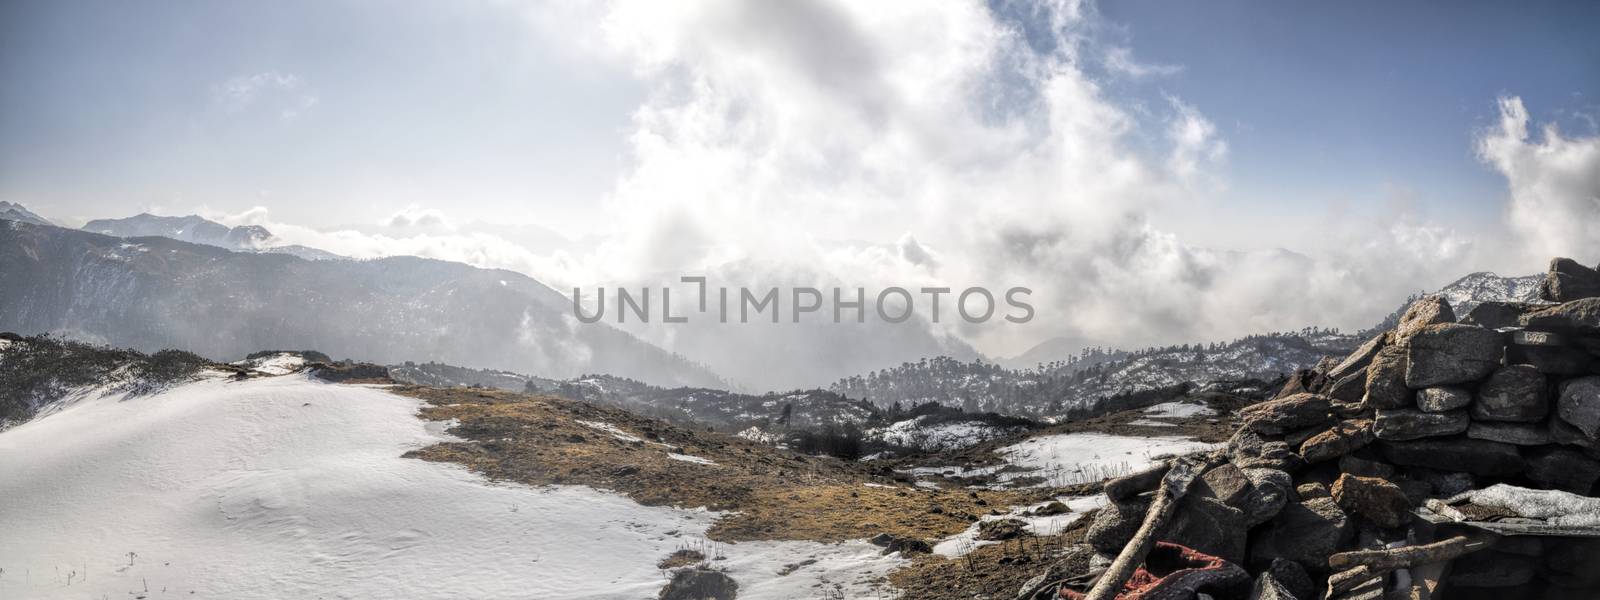 Scenic view of cloudy mountains in Arunachal Pradesh region, India